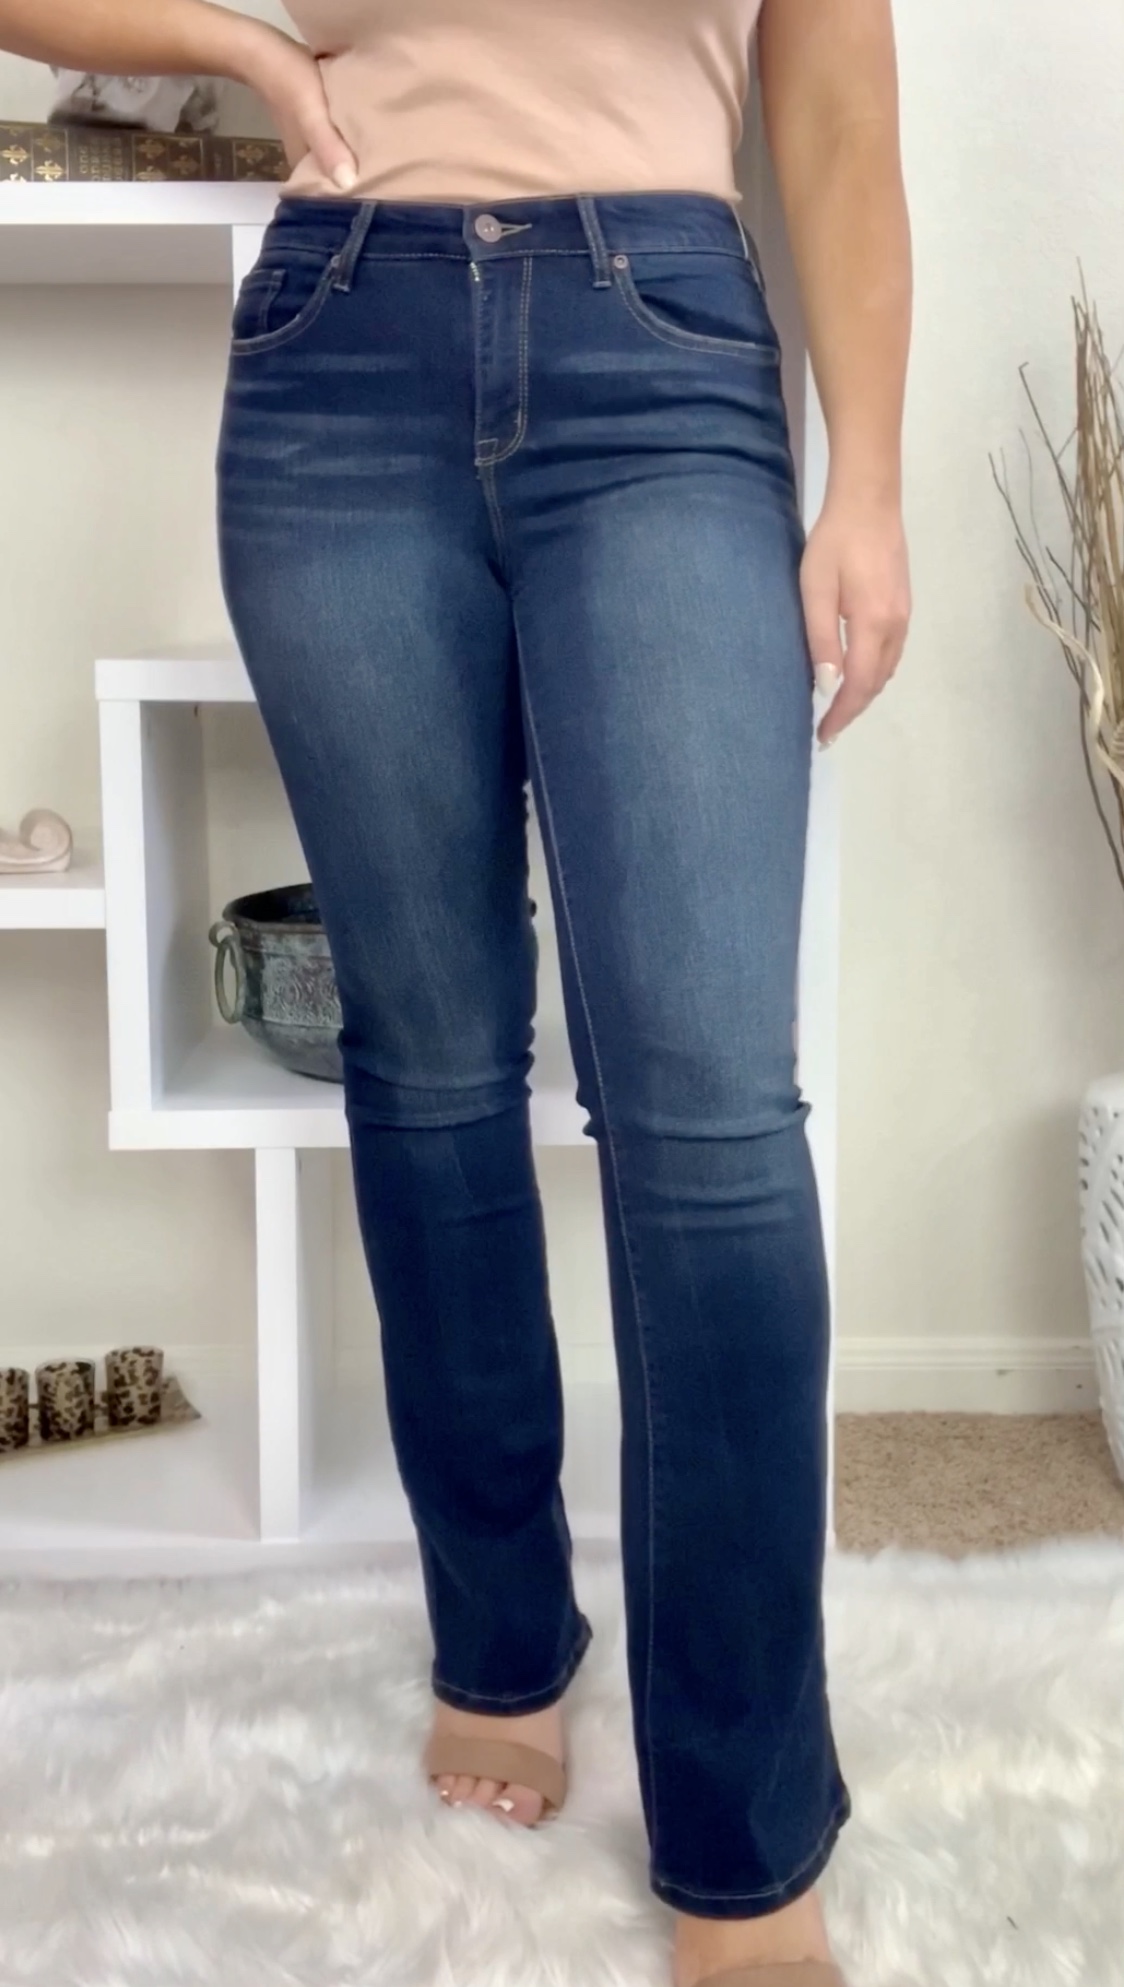 Sofia Vergara Jeans-Huge Try-on Walmart Haul